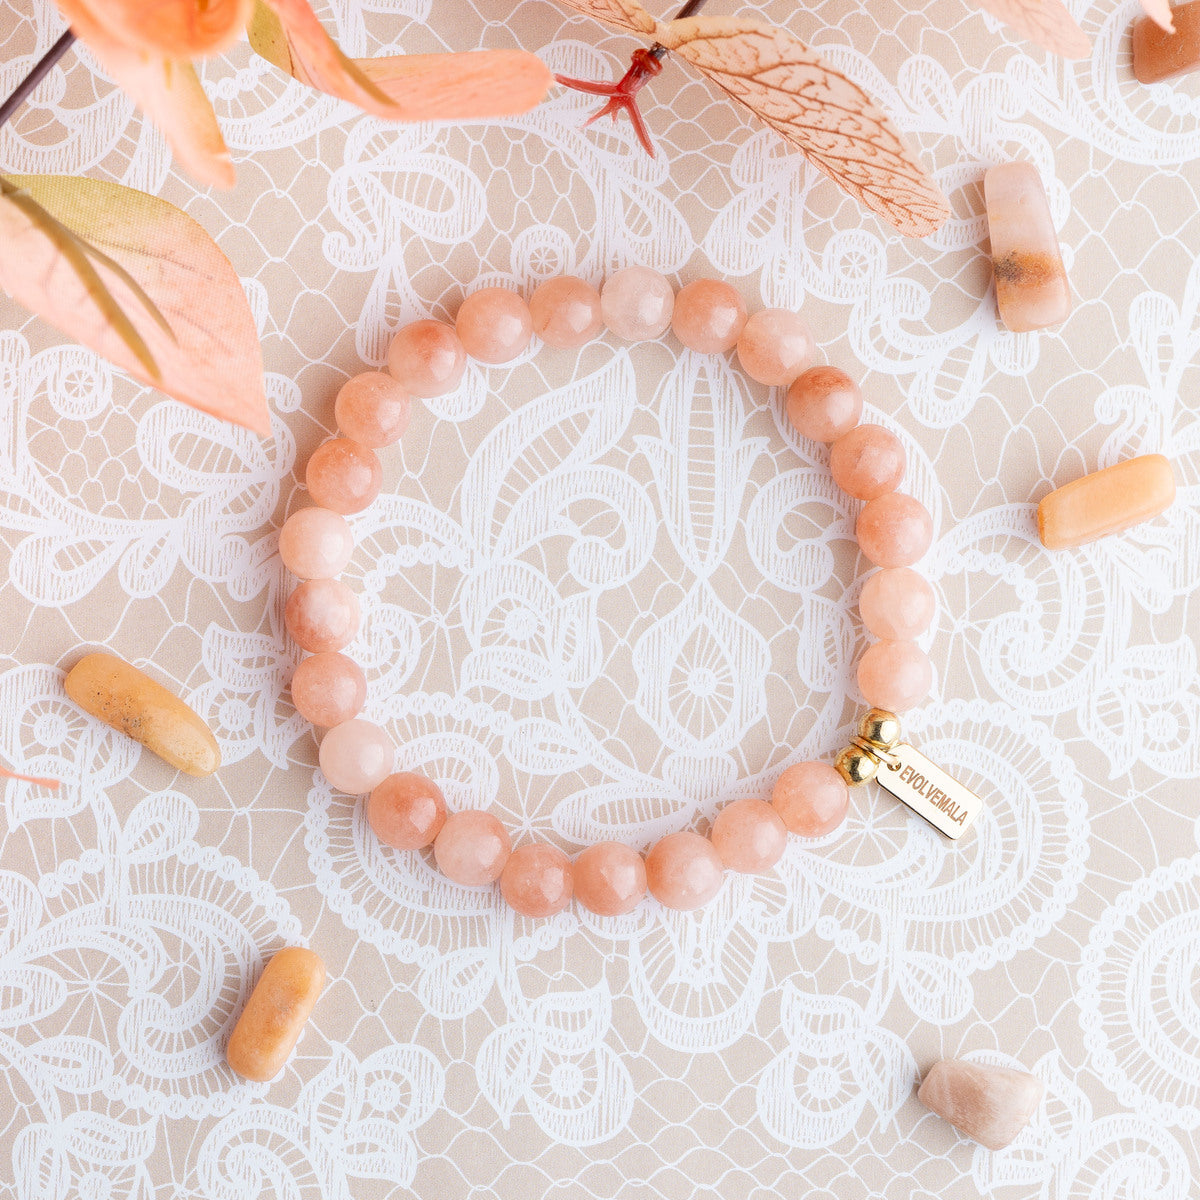 Peach Moonstone 'Soft Dawn' Bracelet